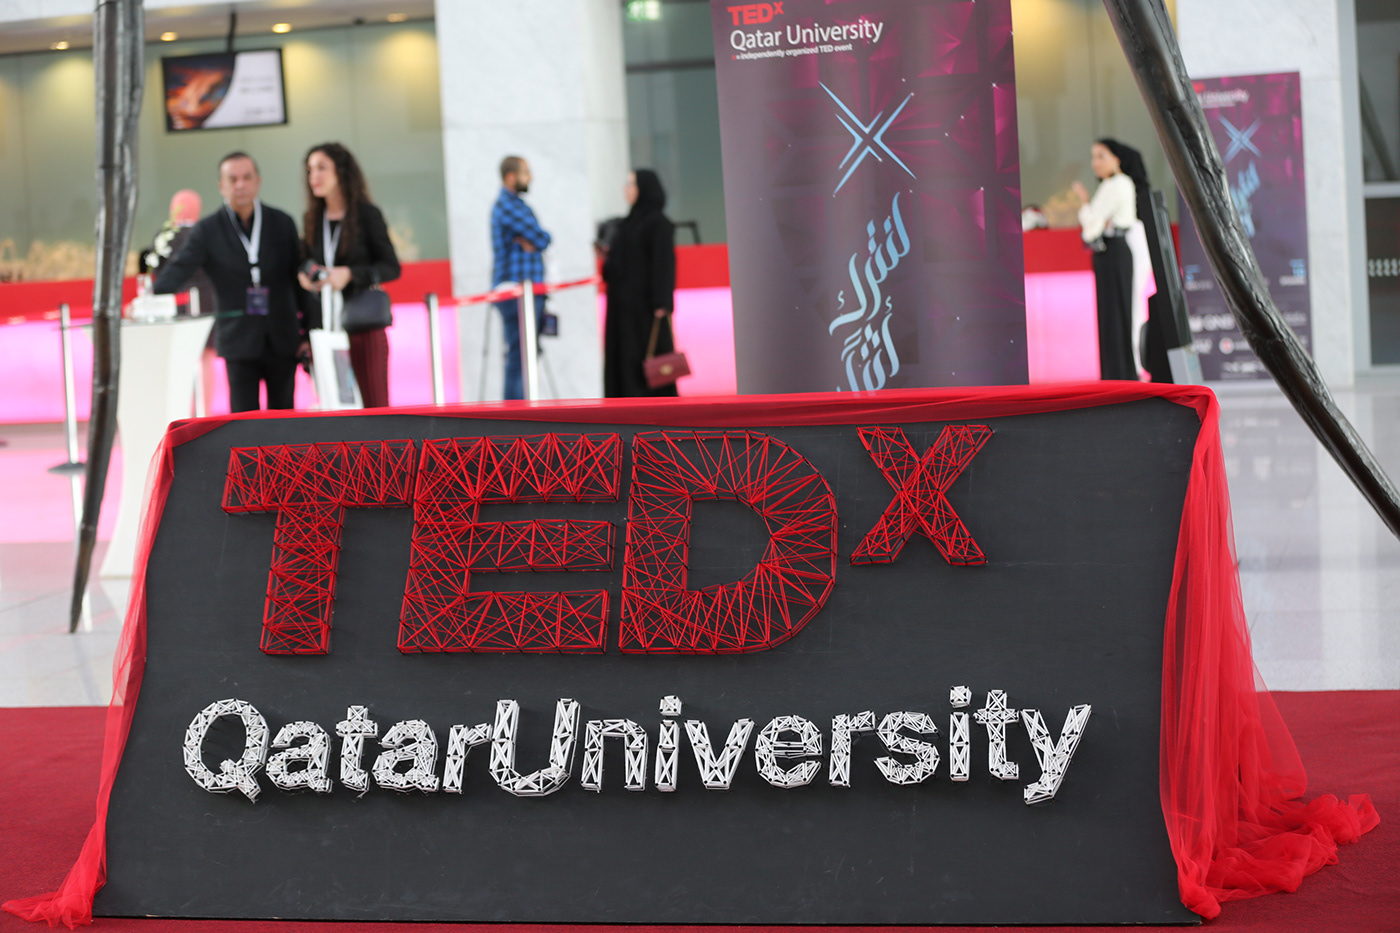 branding  Theme TEDx TED TEDxQatarUniversity Qatar Qatarliving visual identity Brand Elements designs